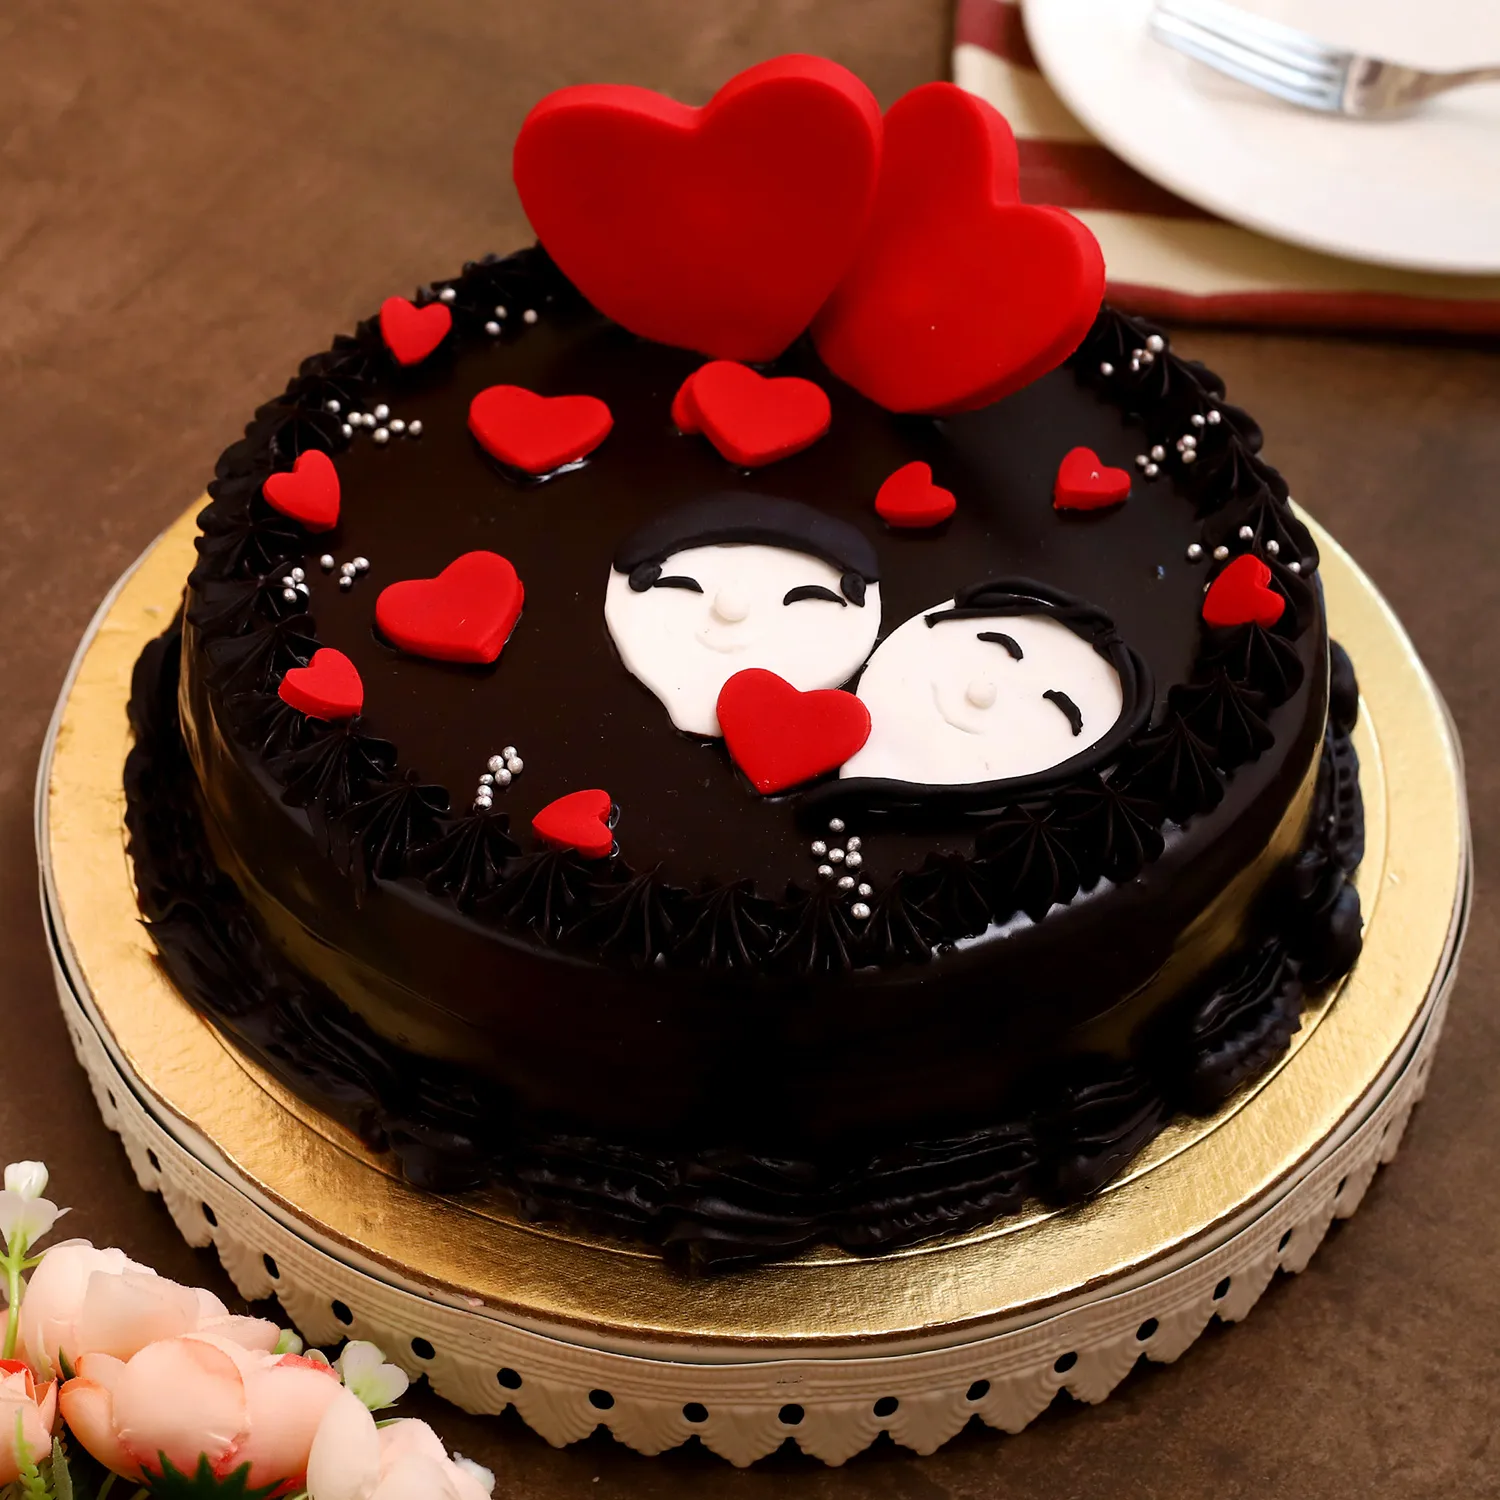 Birthday Cake For Husband @ ₹349 | Free Shipping | Save Upto 150